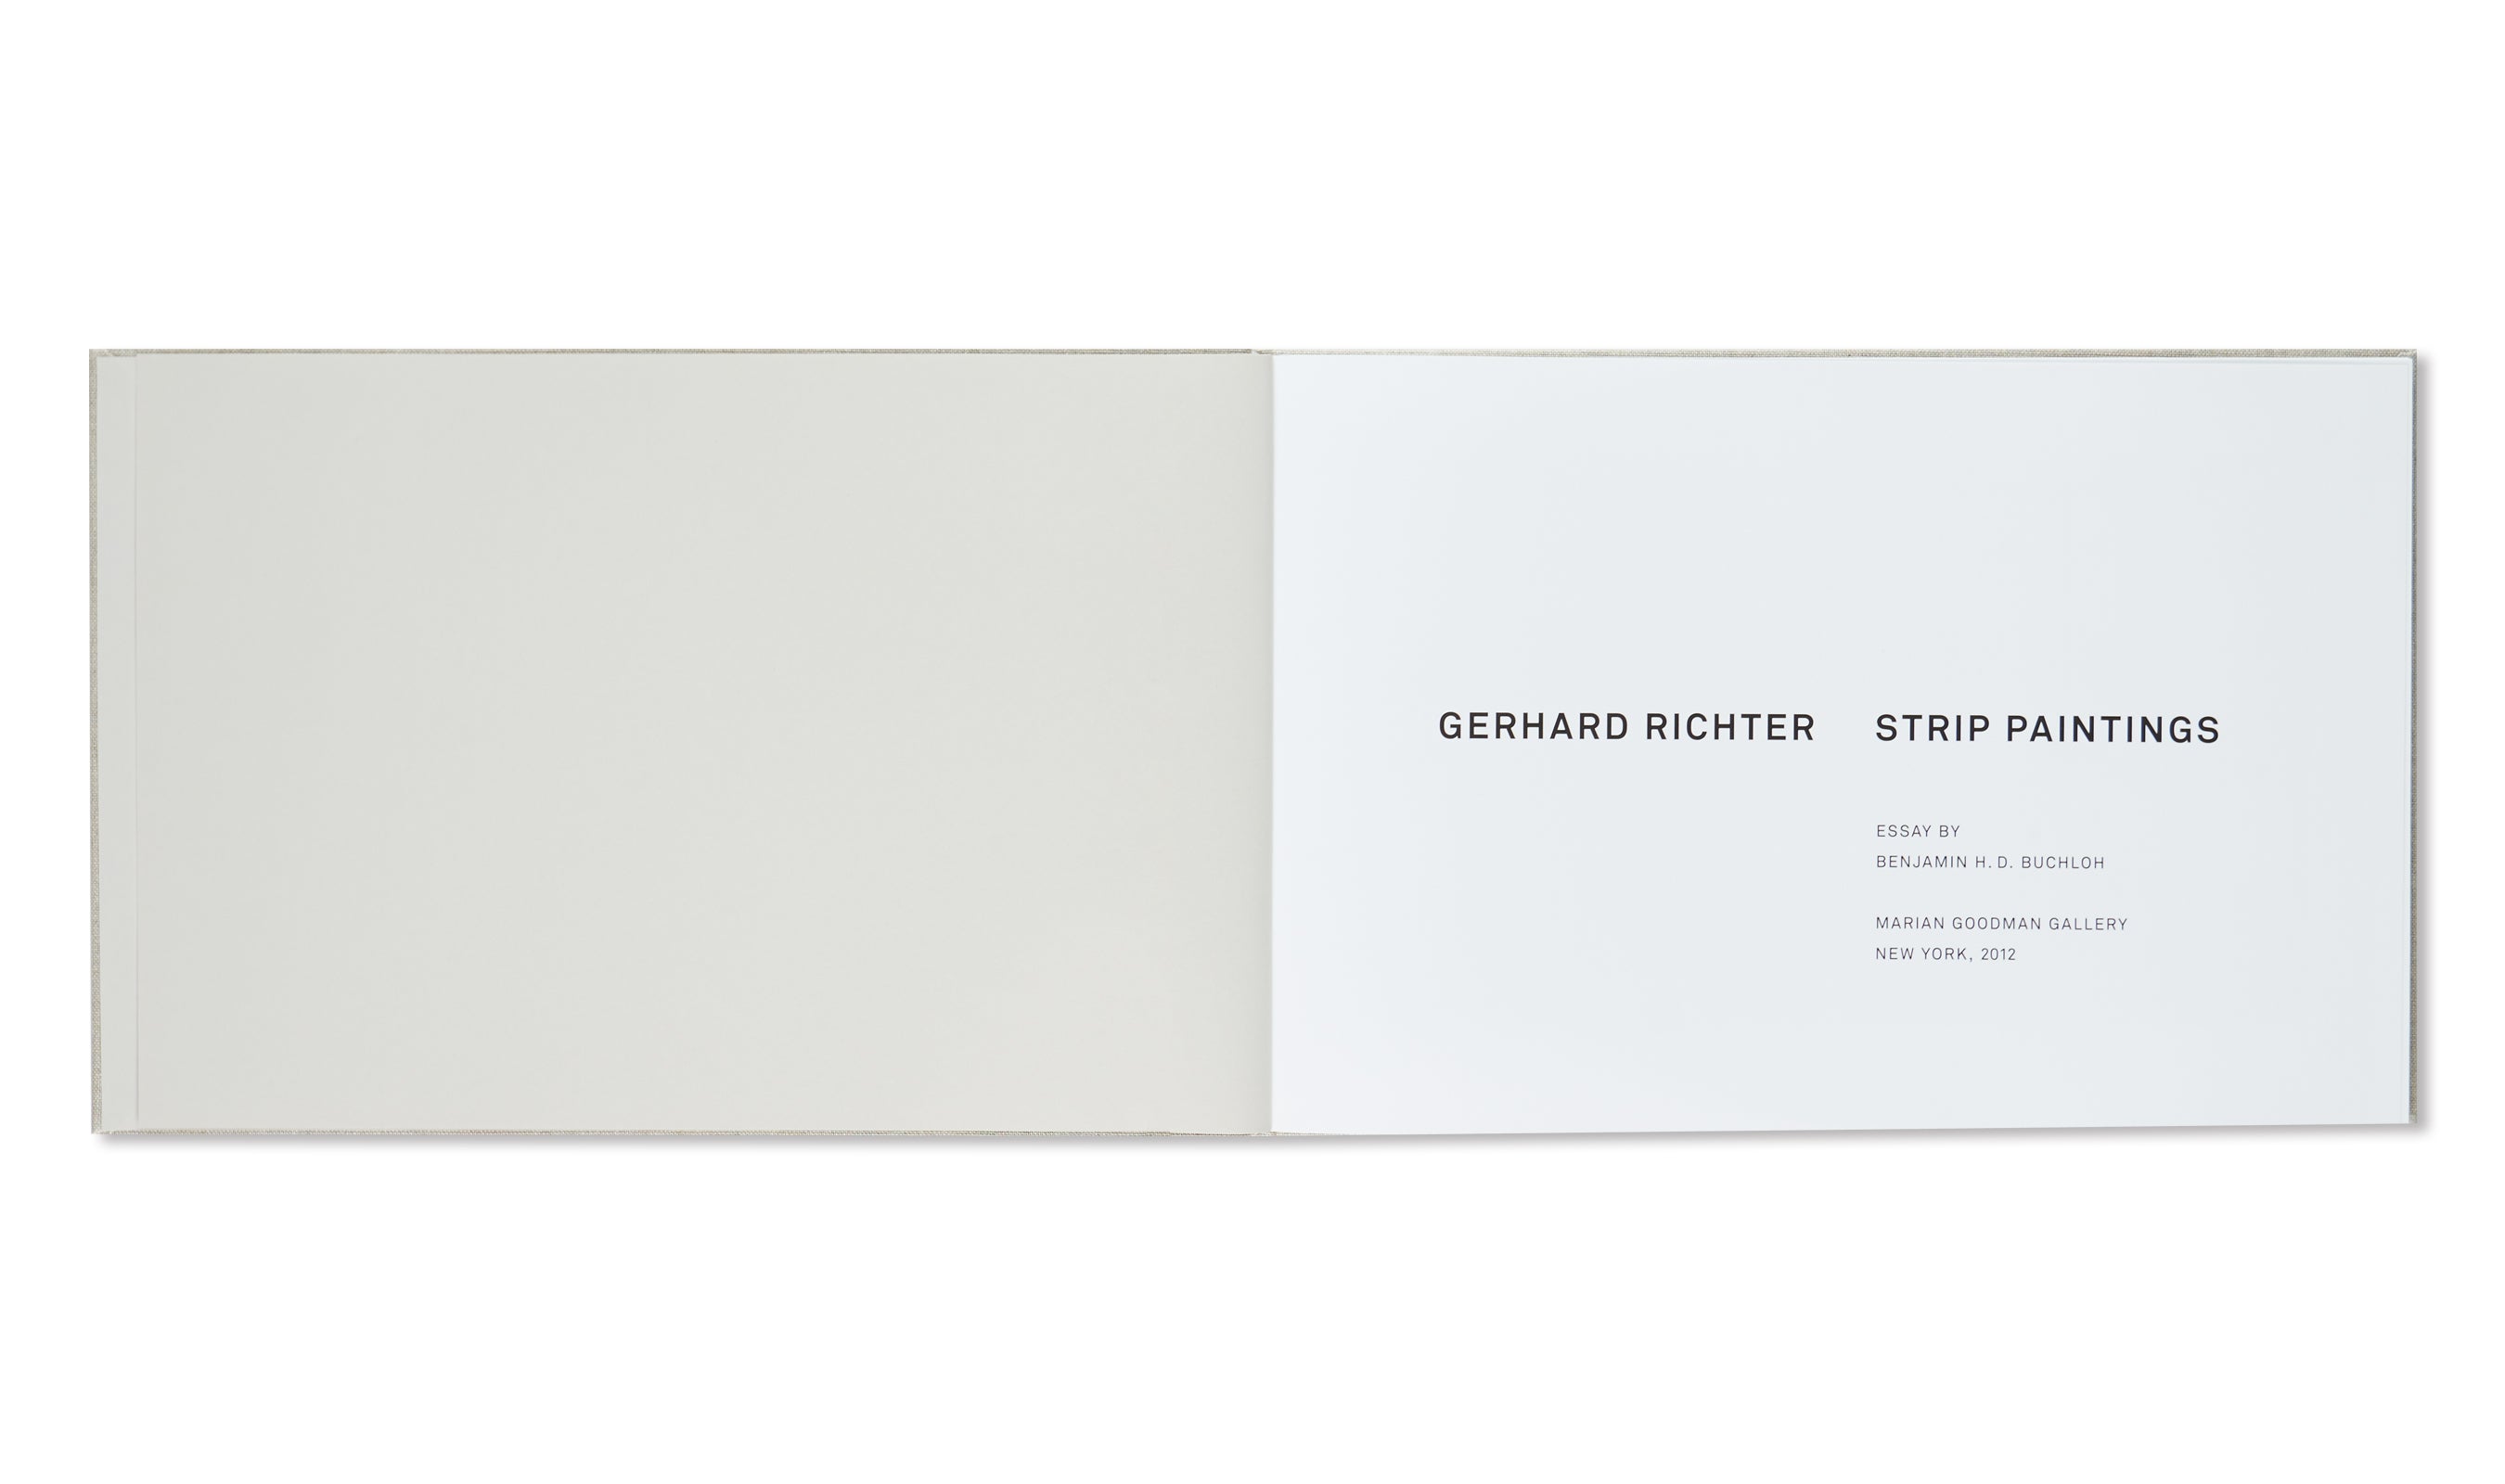 STRIP PAINTINGS by Gerhard Richter